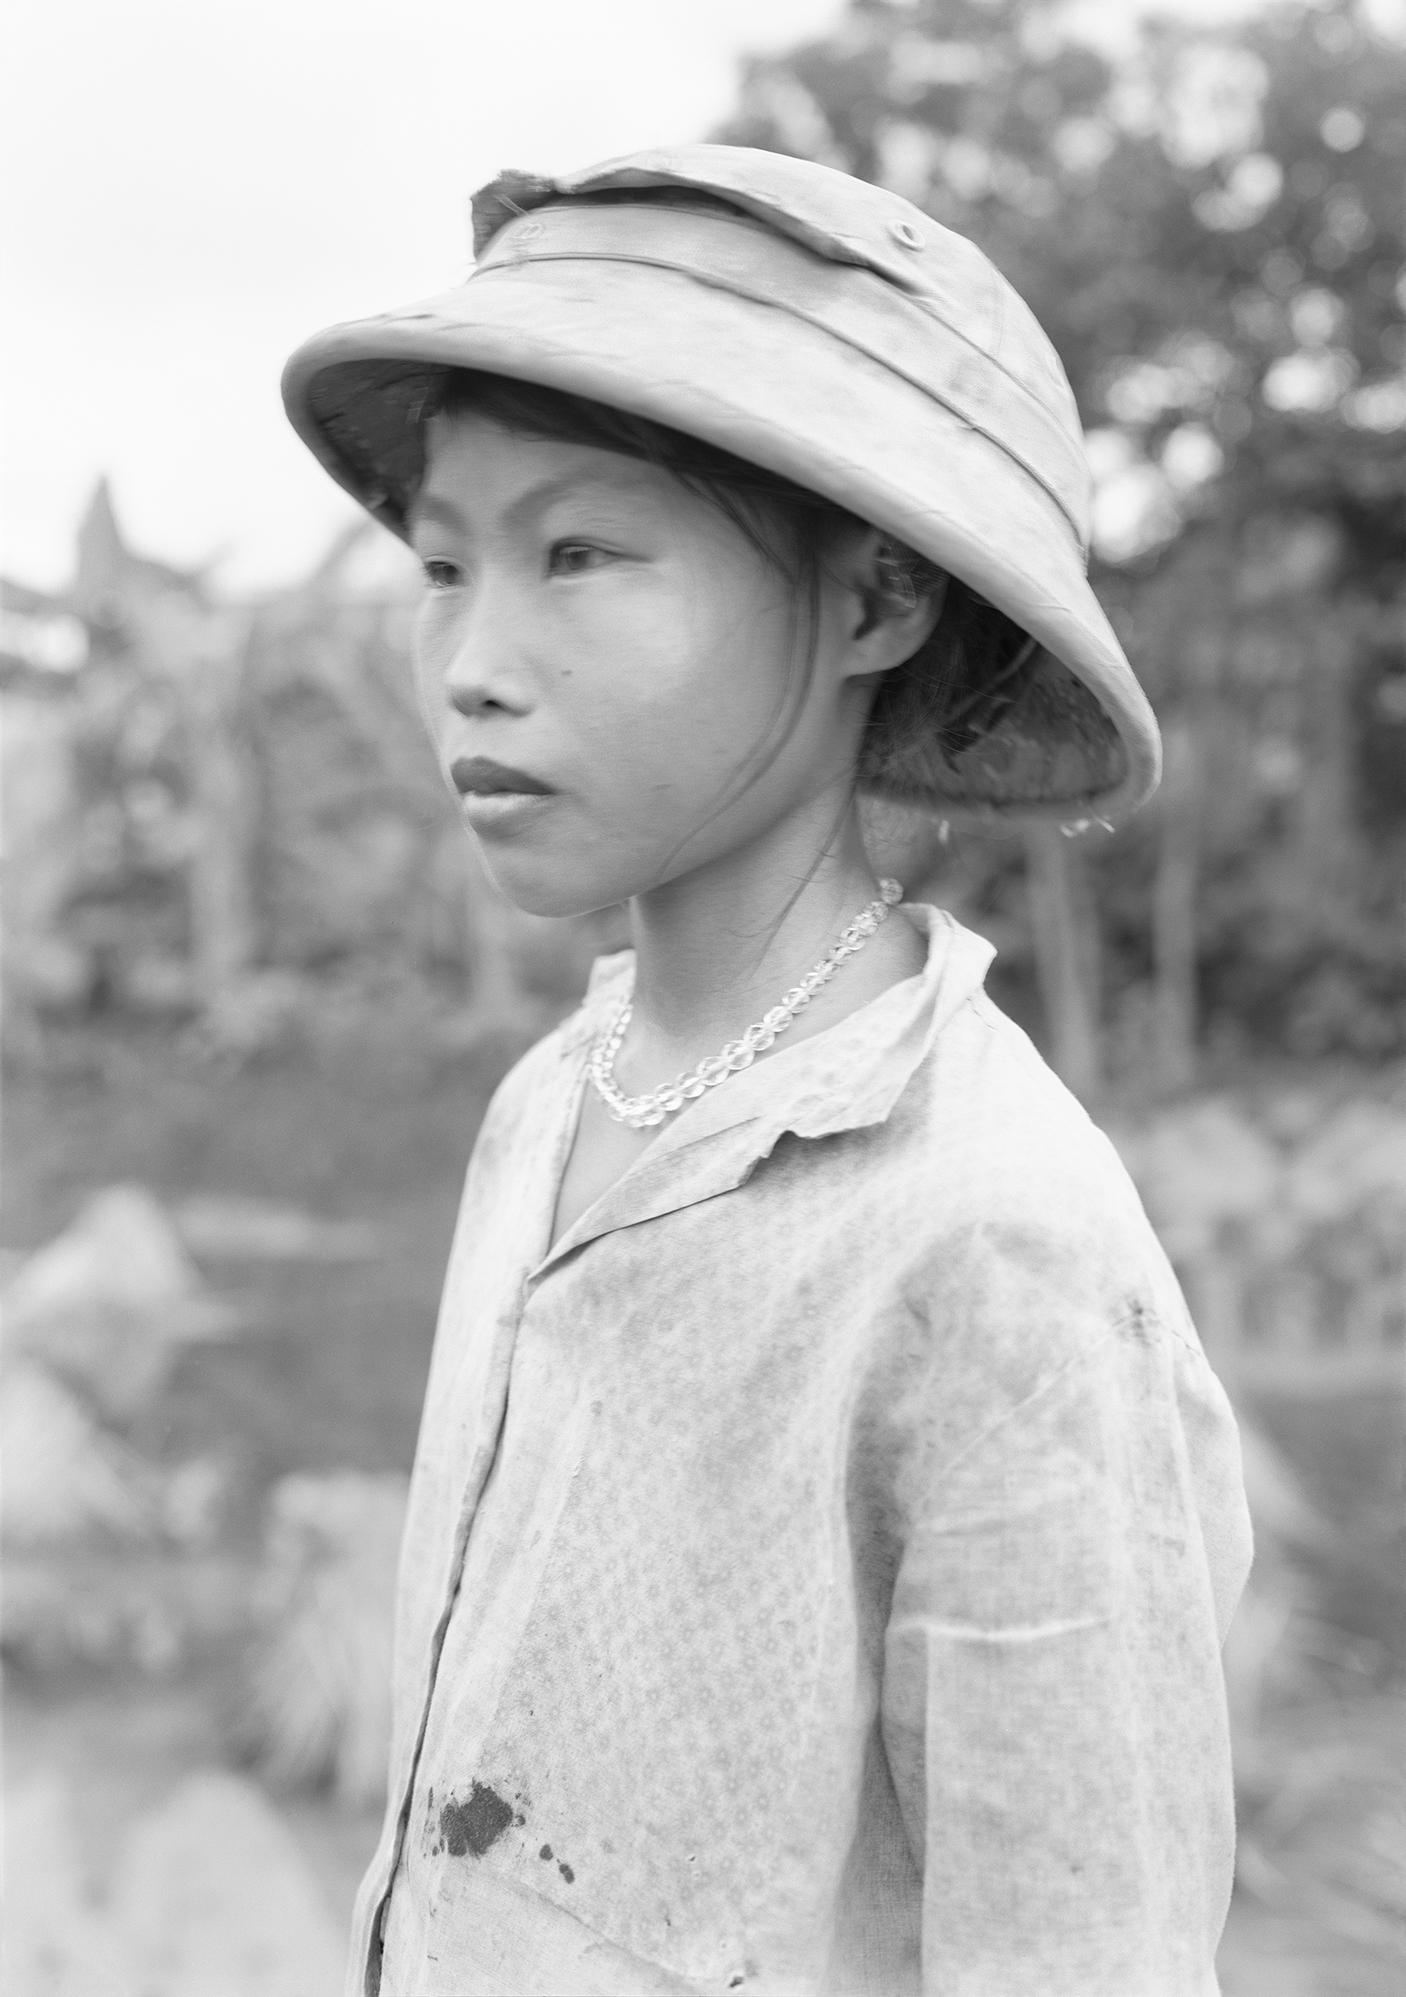 Untitled, Nam Ha, 1994